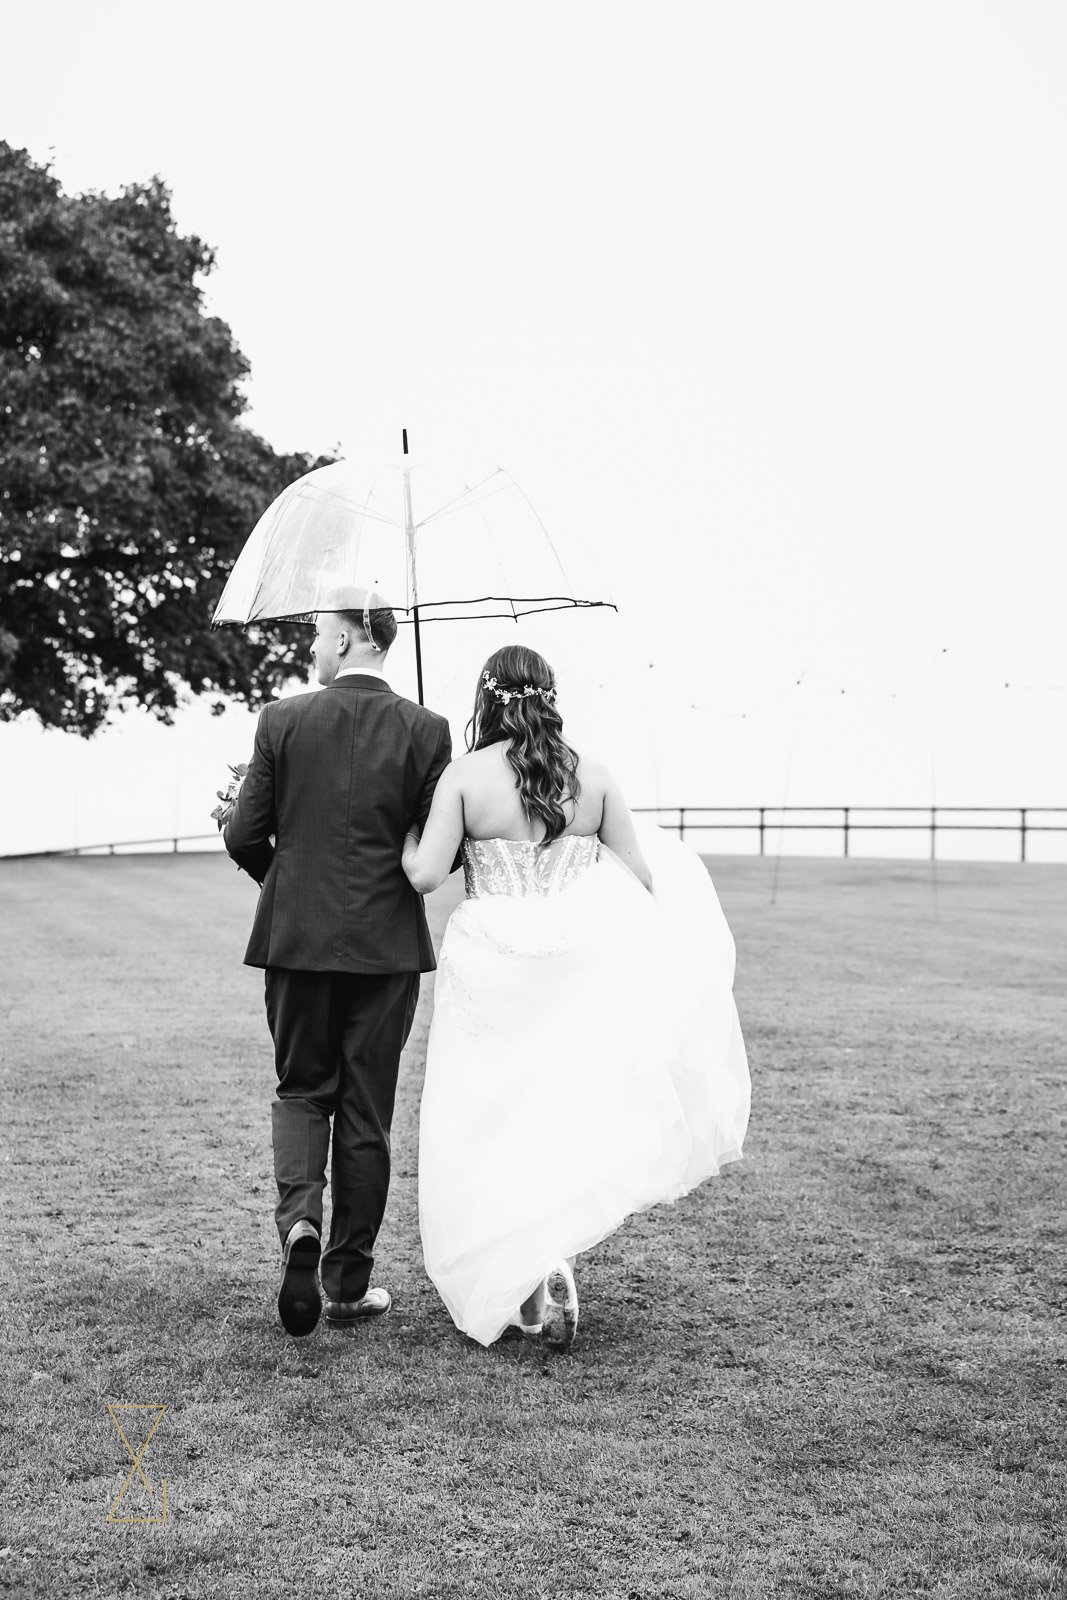 Rain-on-wedding-day-tips-45.jpg